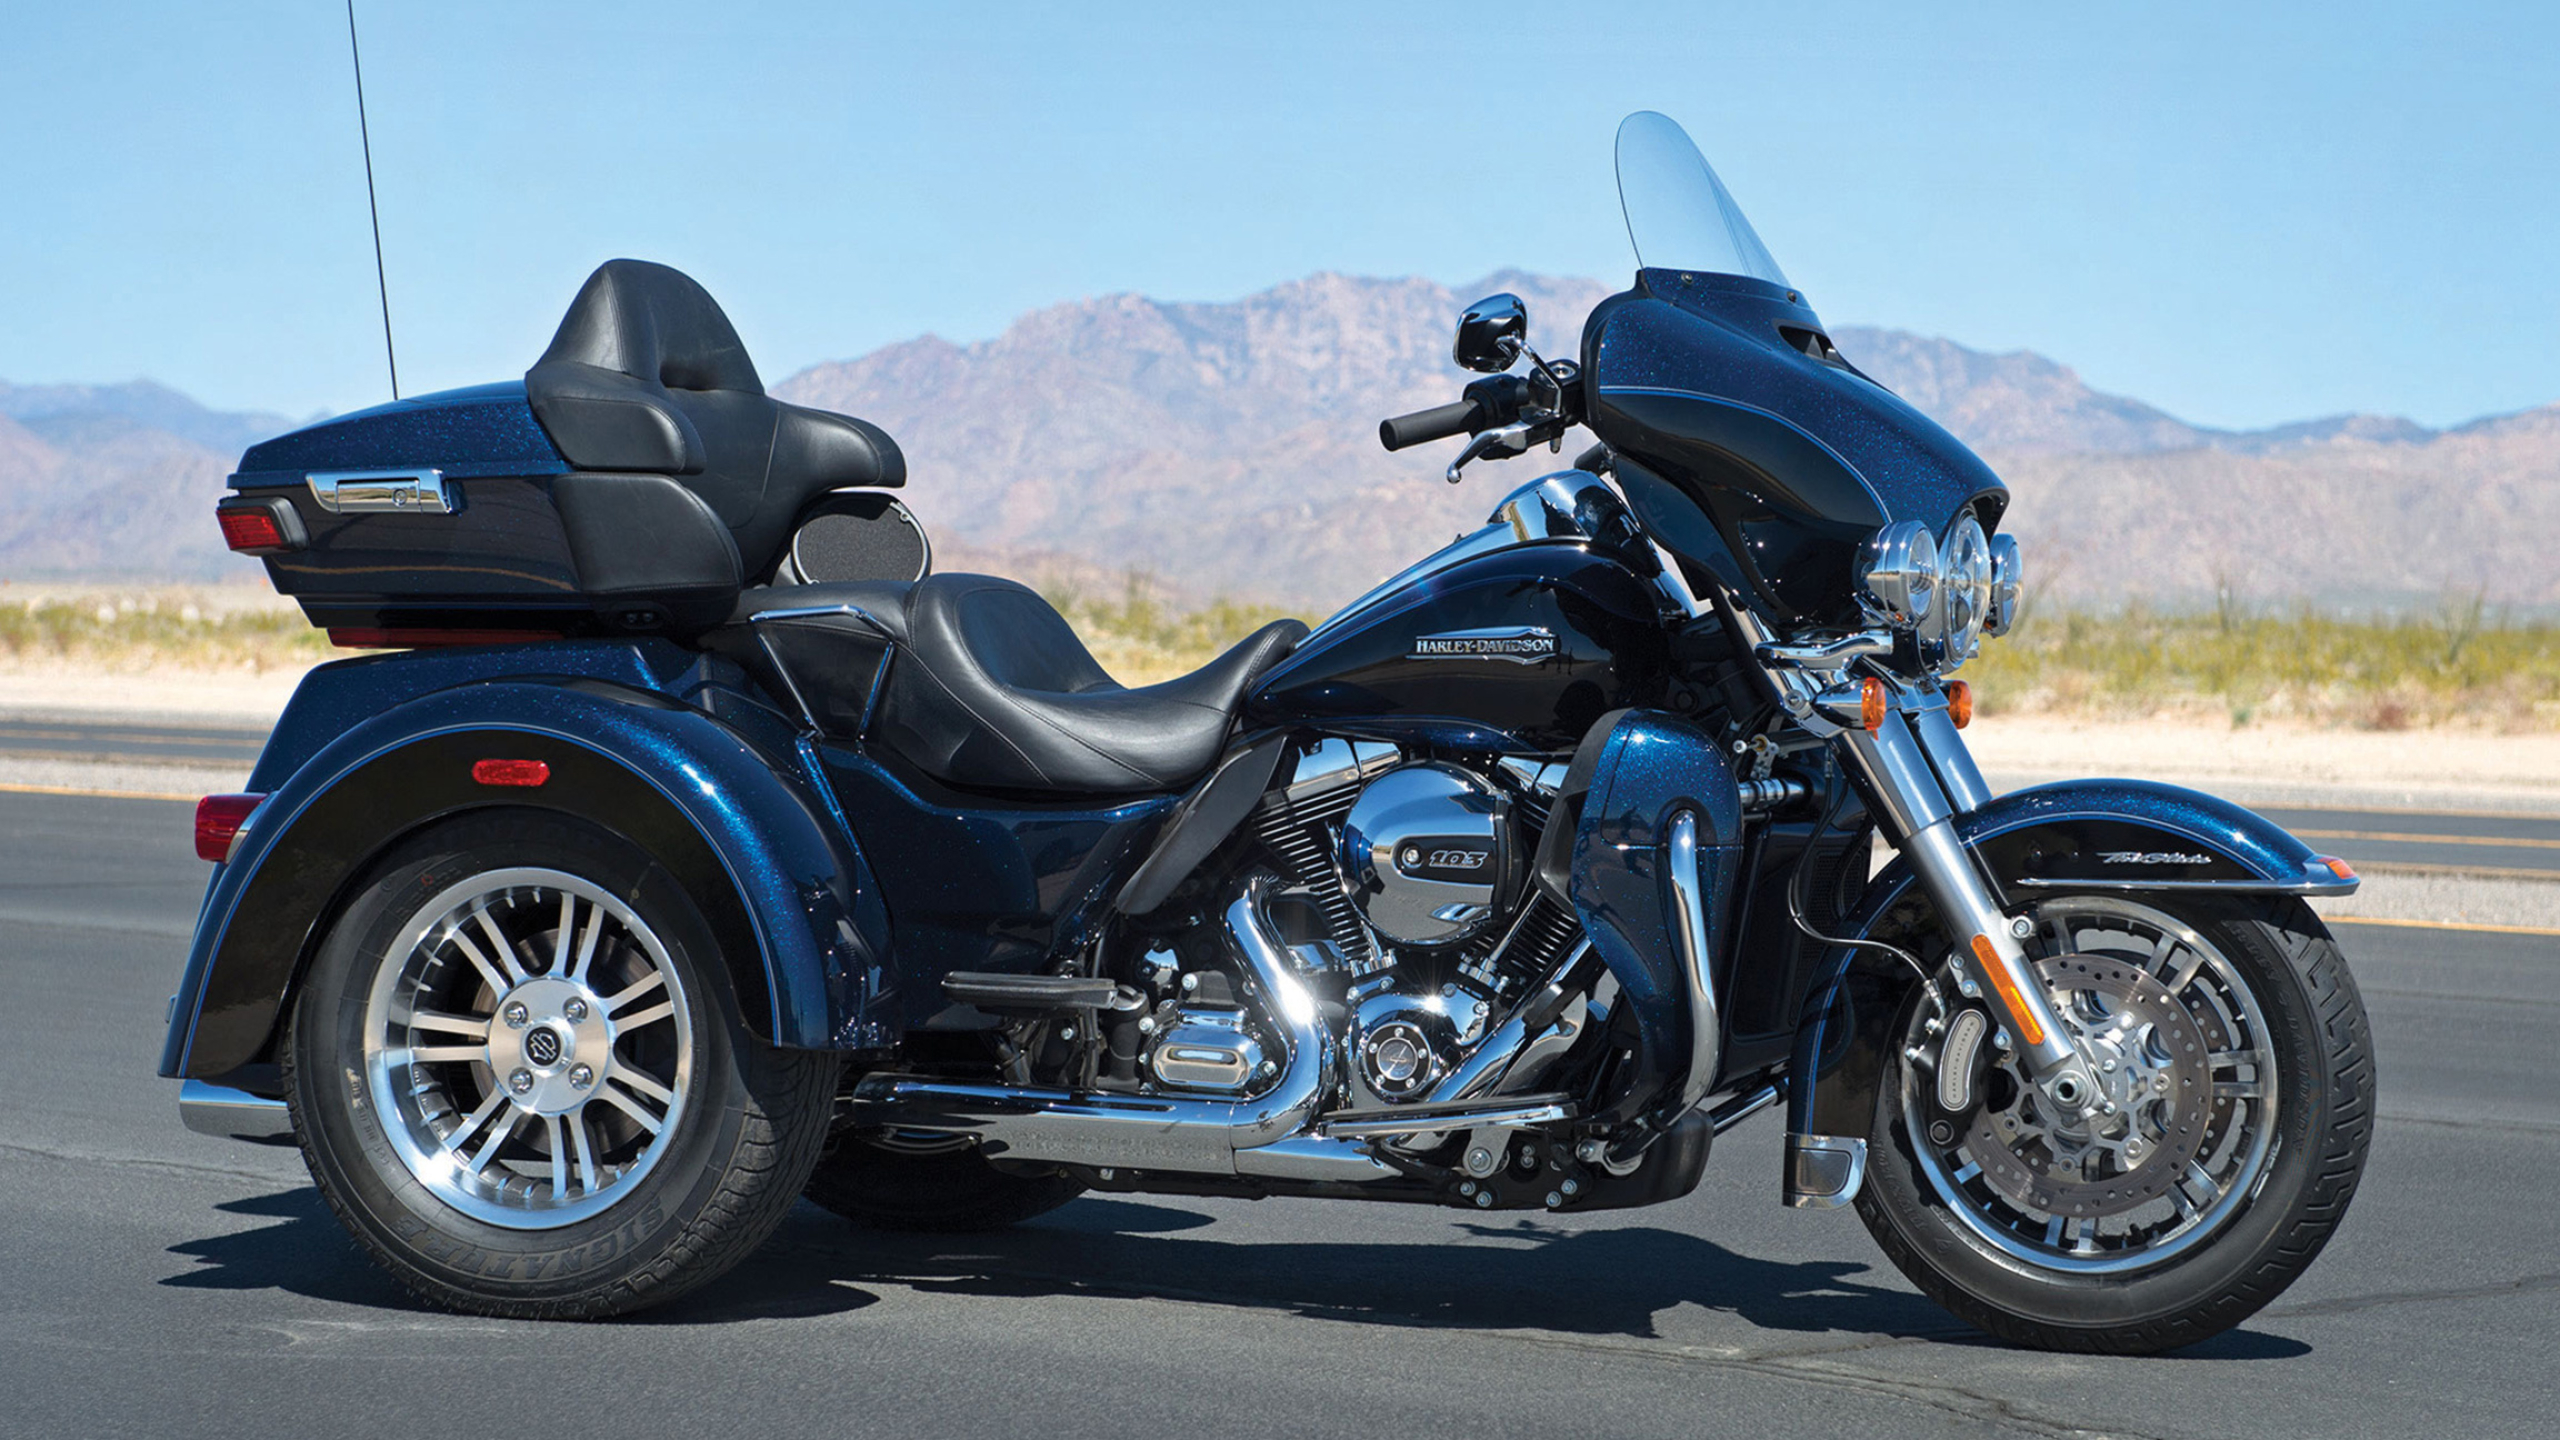 Harley-Davidson Tri Glide Ultra, Trike motorcycle, HD desktop wallpaper, Iconic brand, 2560x1440 HD Desktop